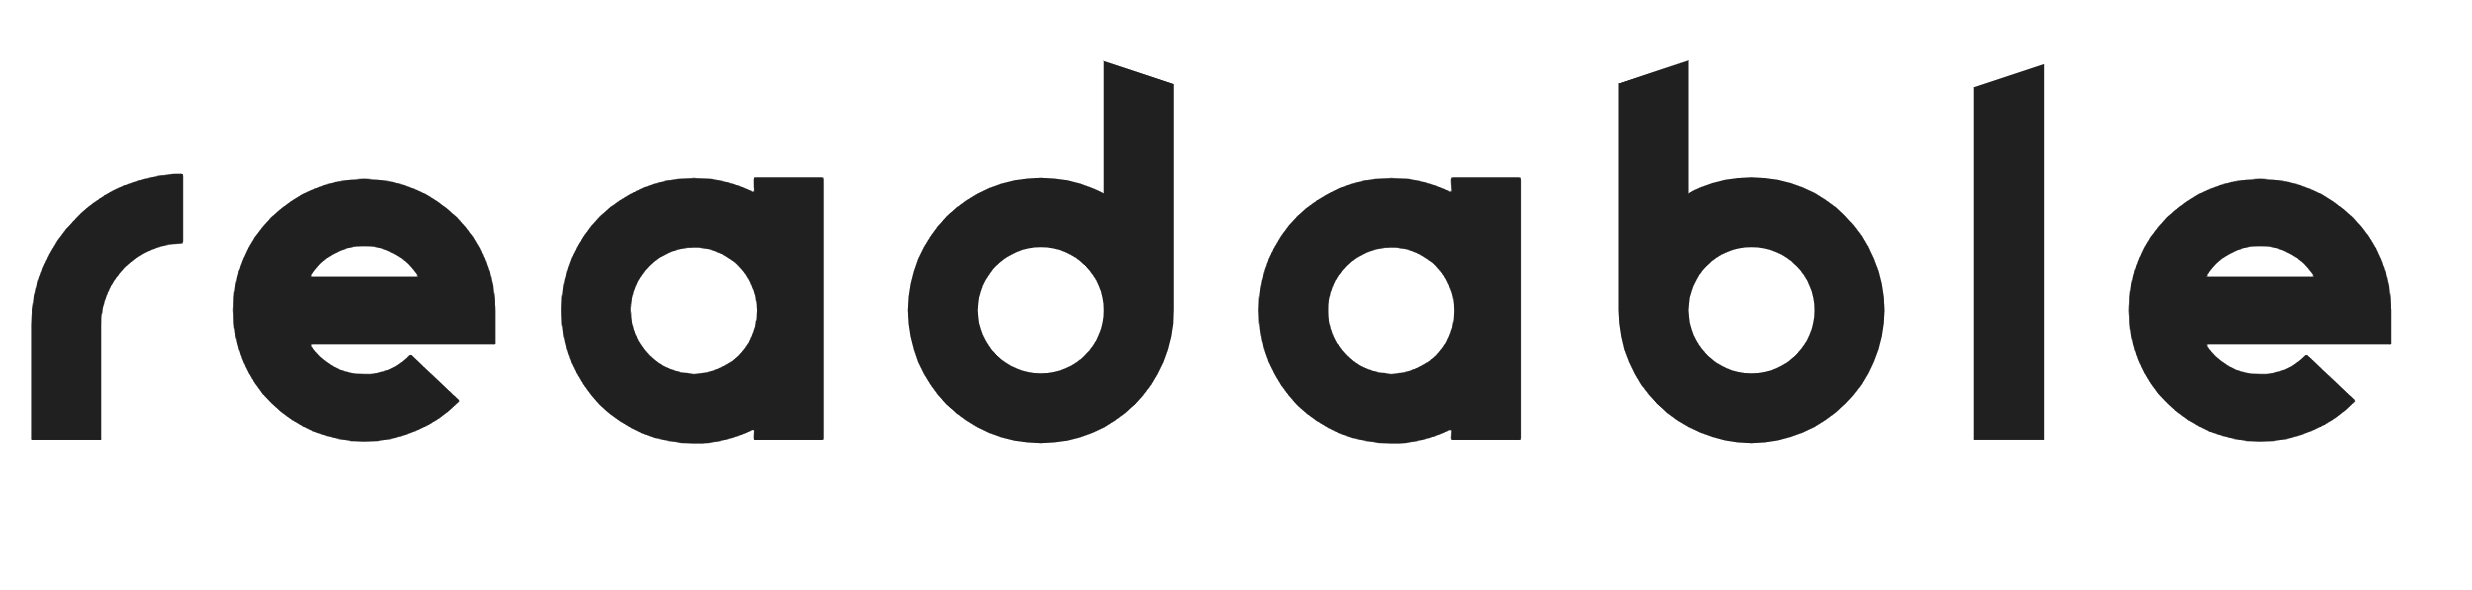 readable-brand-logo